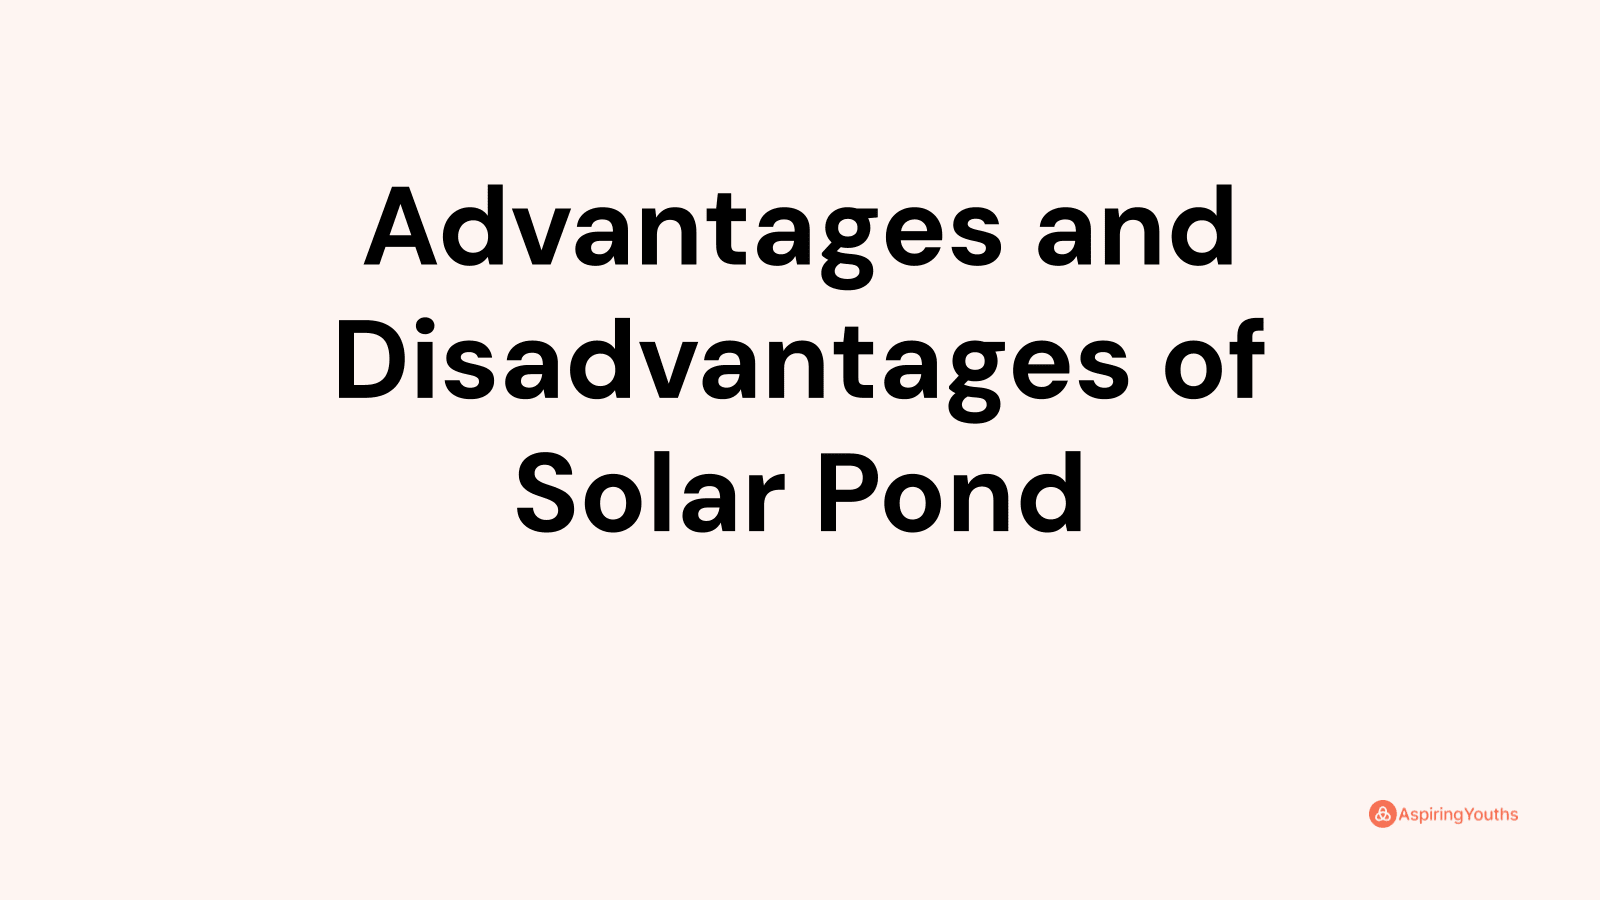 Advantages and disadvantages of Solar Pond